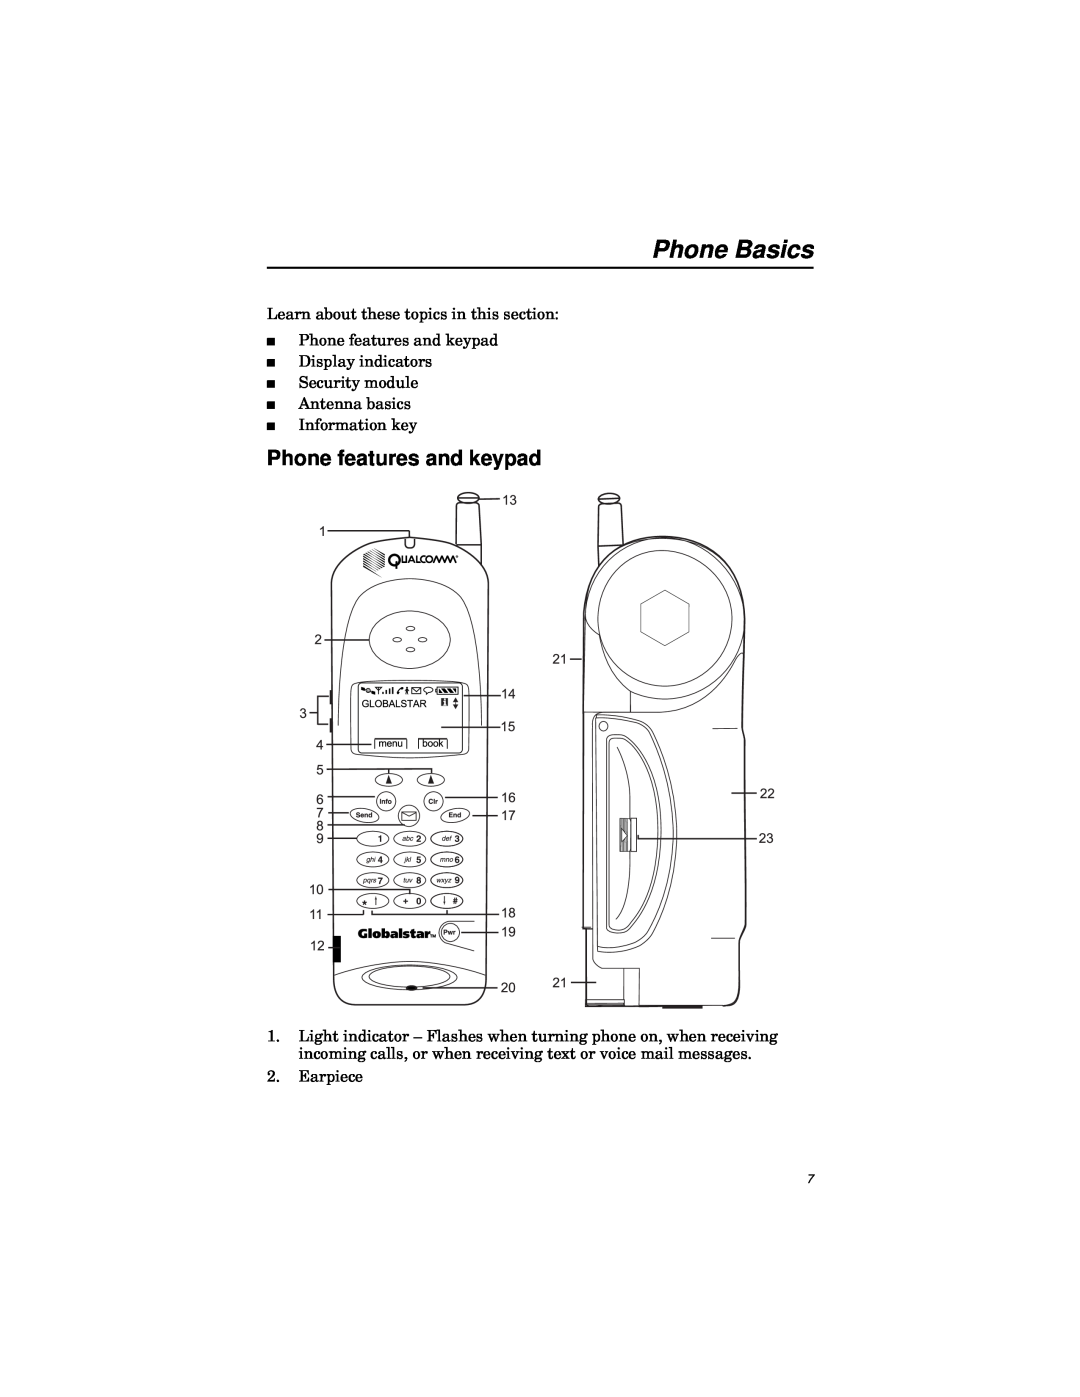 Qualcomm GSP-1600 manual Phone Basics, Phone features and keypad 